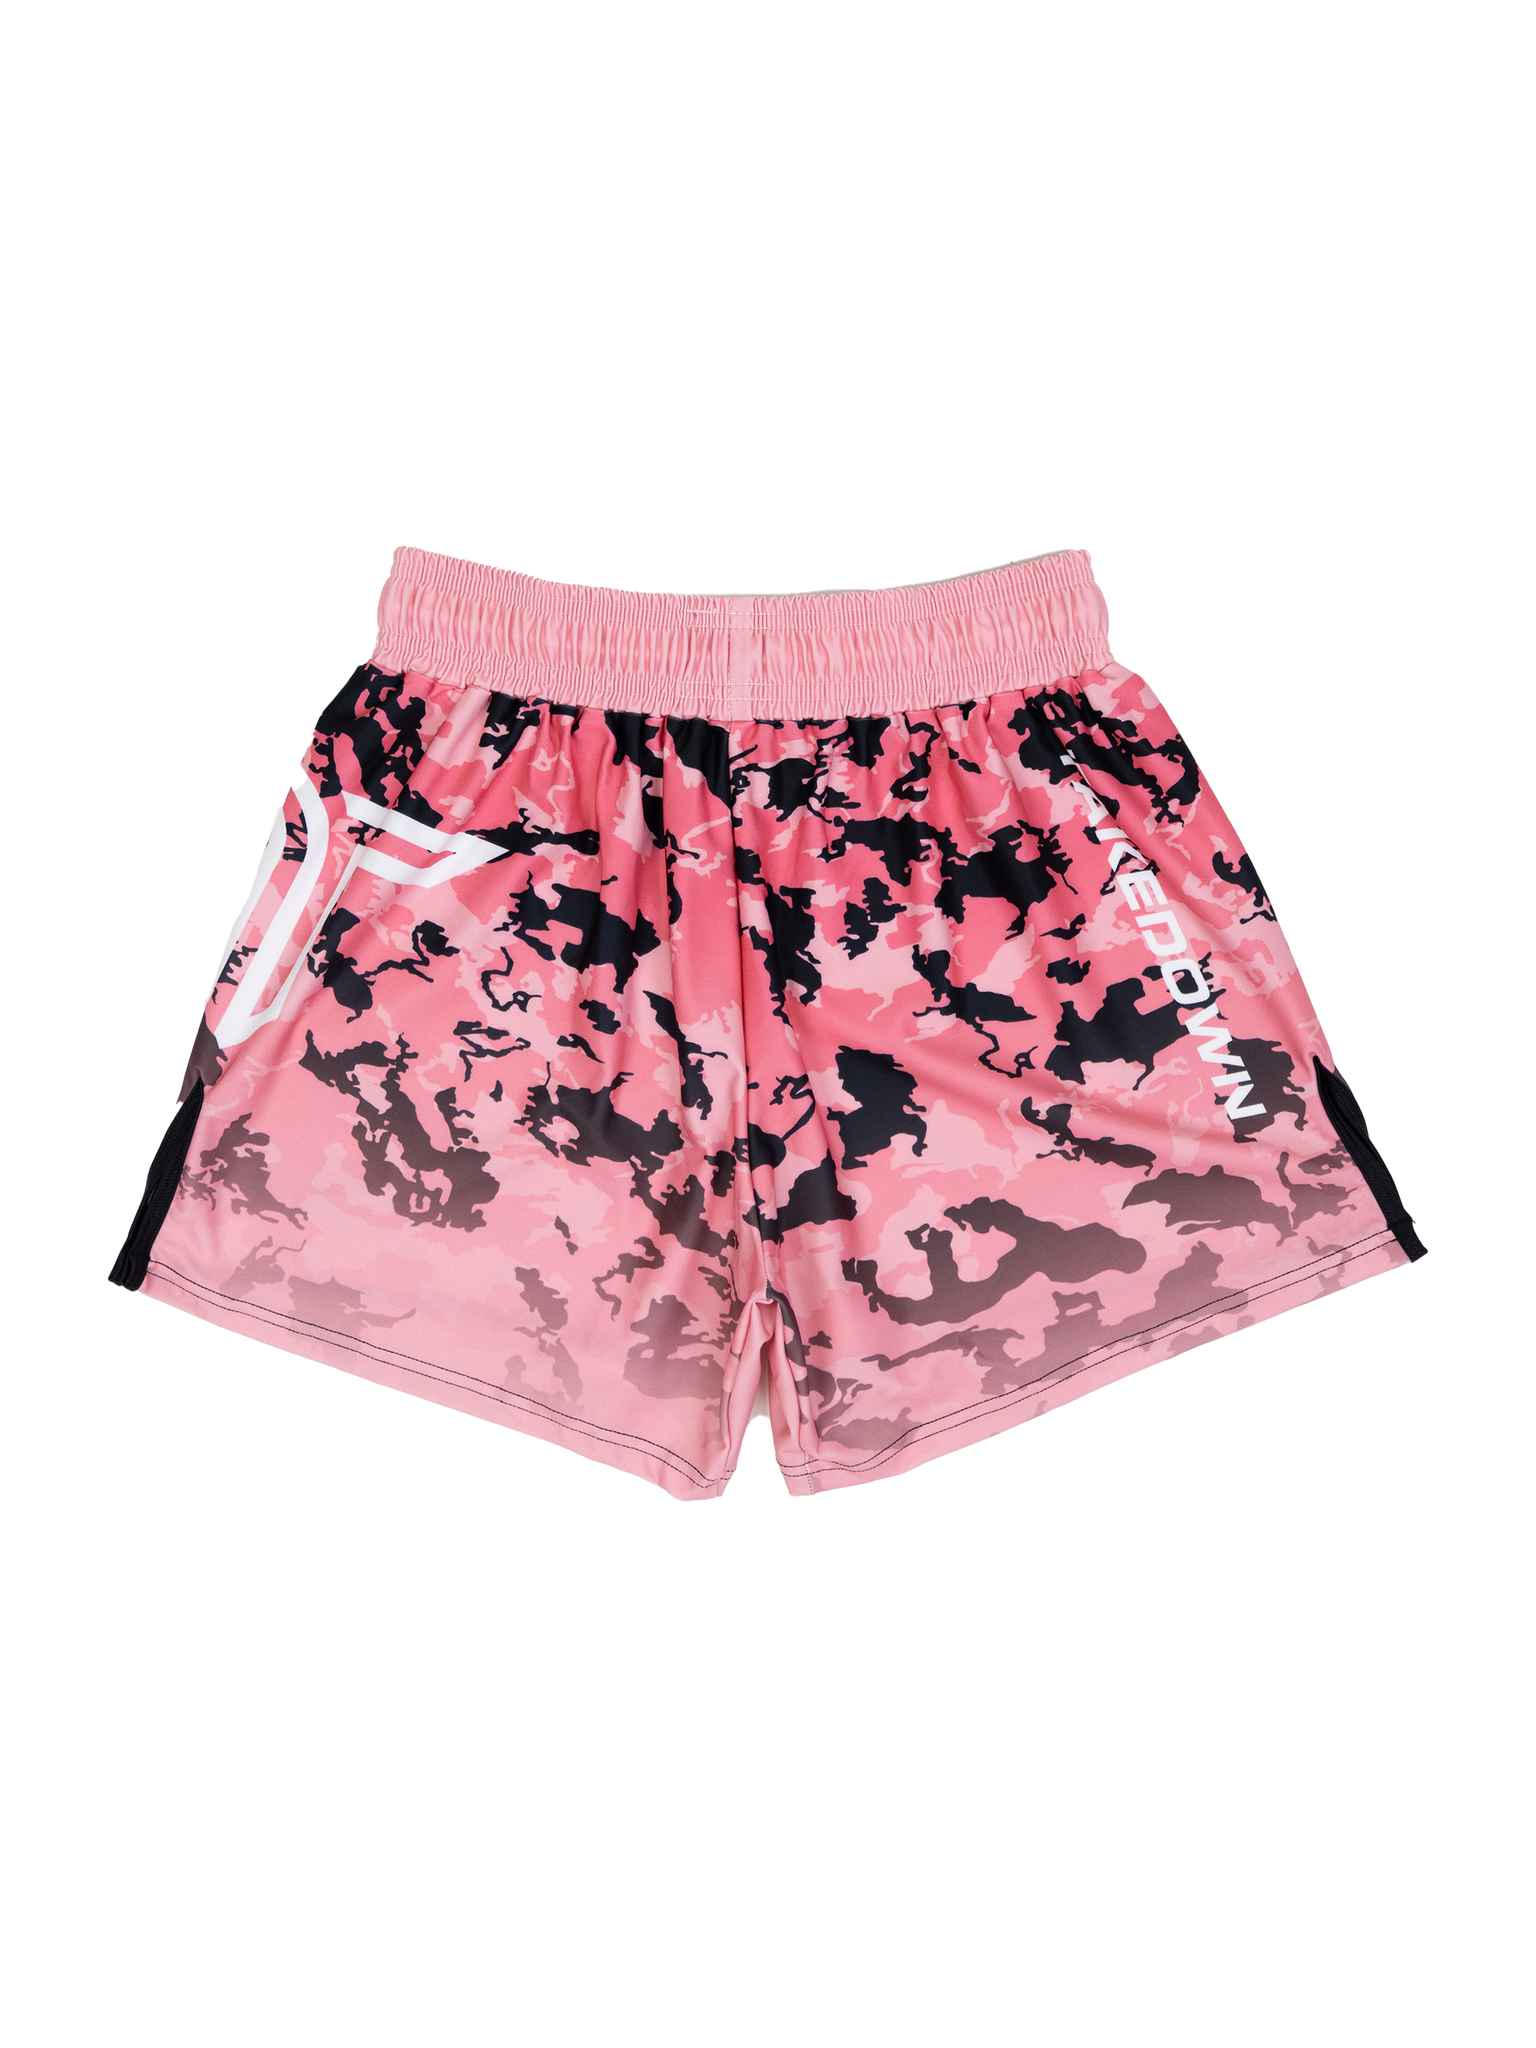 Particle Camo Fight Shorts - Malibu Pink (5"&7" Inseam)